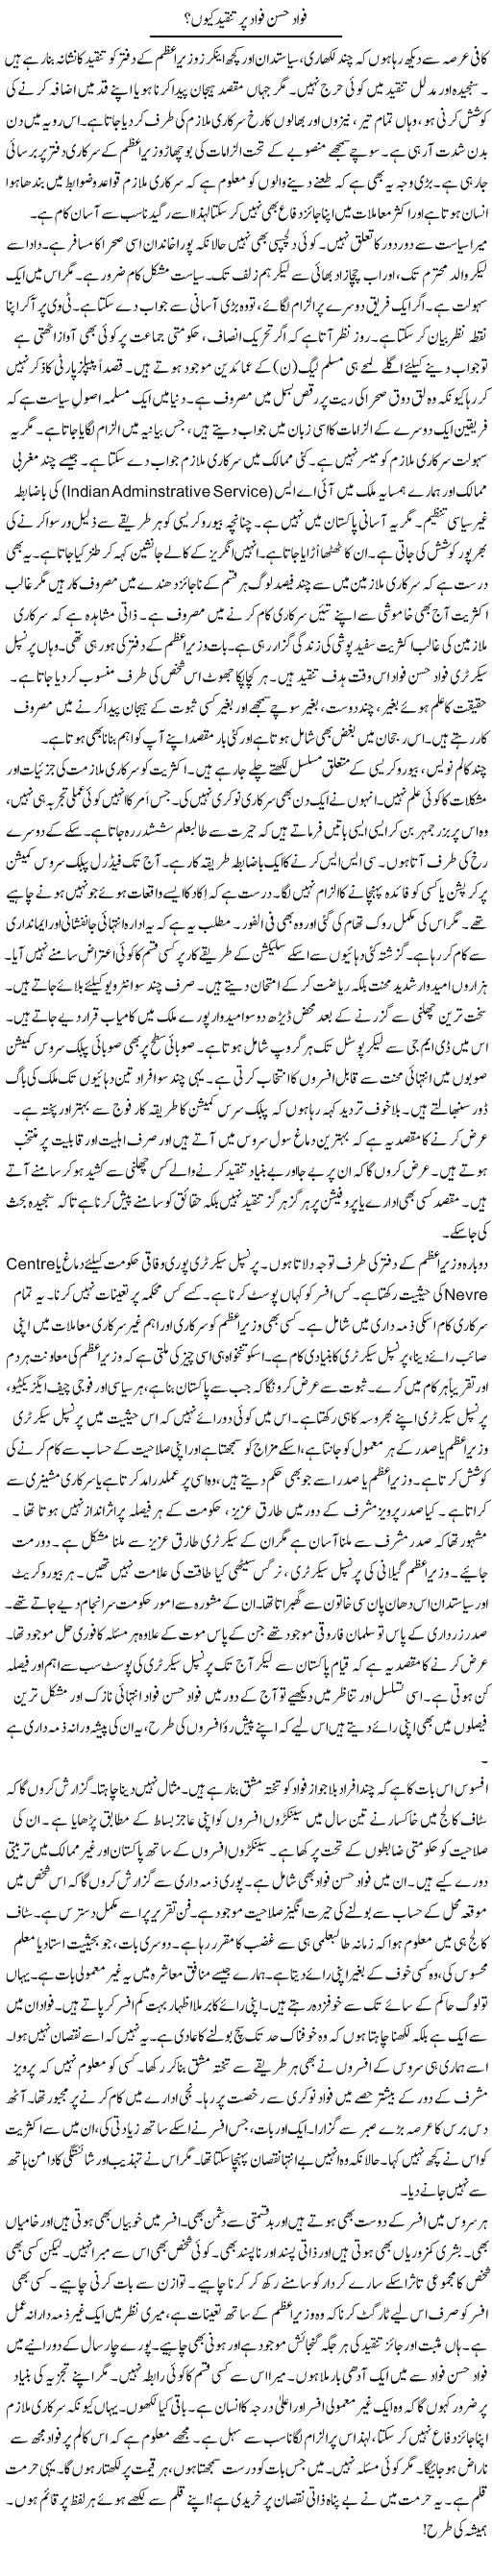 Fawad Hasan Fawad Par Tanqeed Kyun? | Rao Manzar Hayat | Info Devil